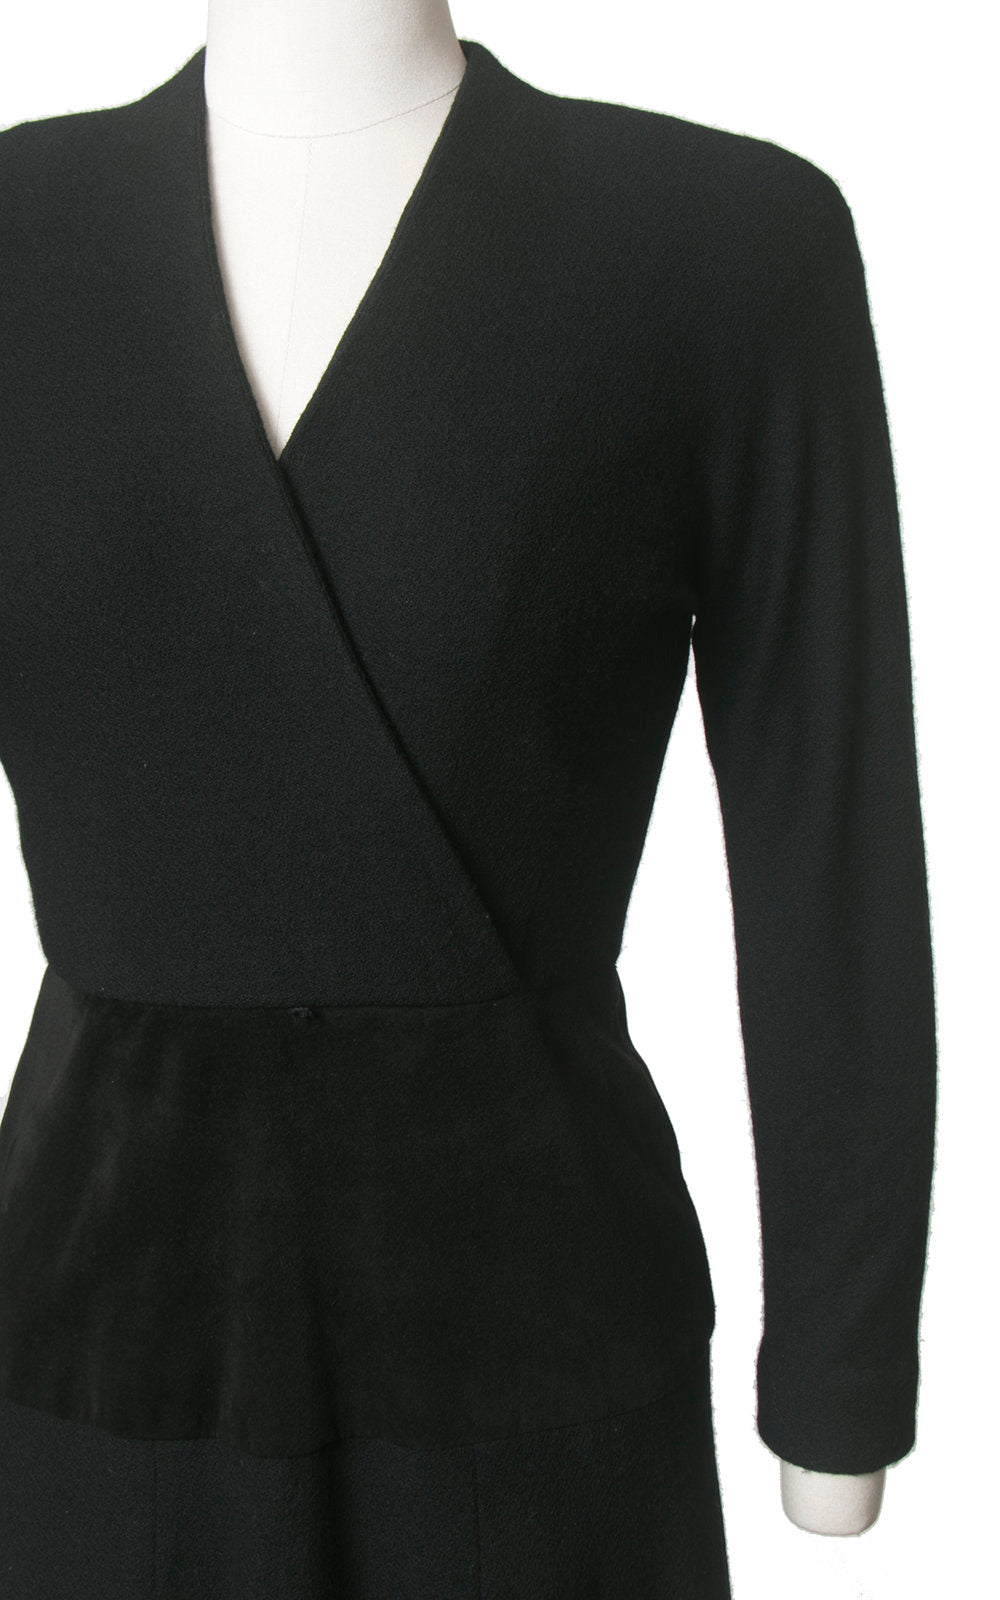 Vintage 1980s Dress | 80s does 1940s Black Wool Suede Long Sleeve Full Skirt Minimalist Midi Dress (small)